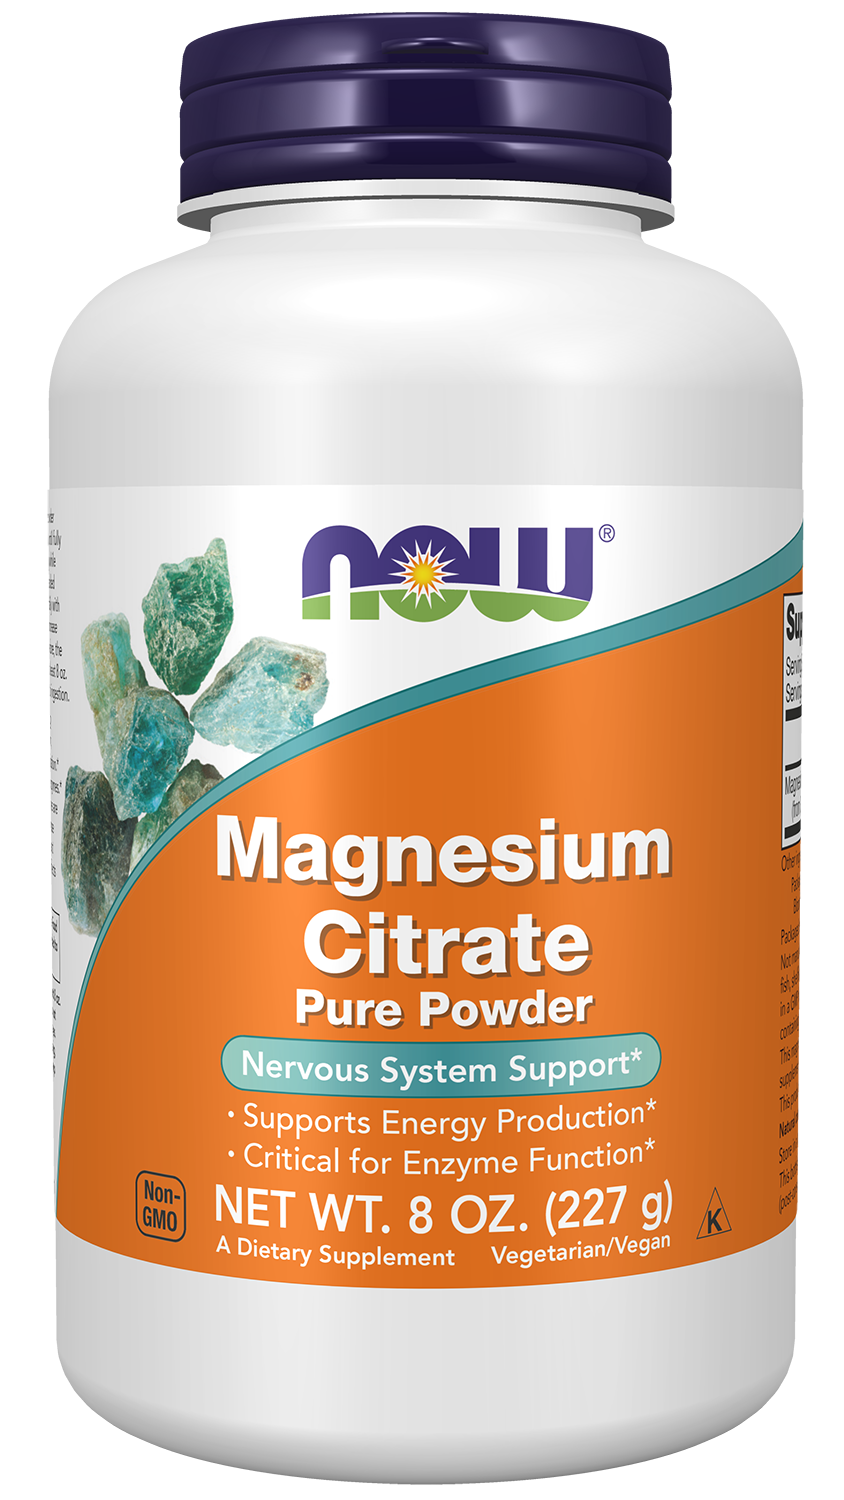 Magnesium Citrate Pure Powder - 8 oz Bottle Front